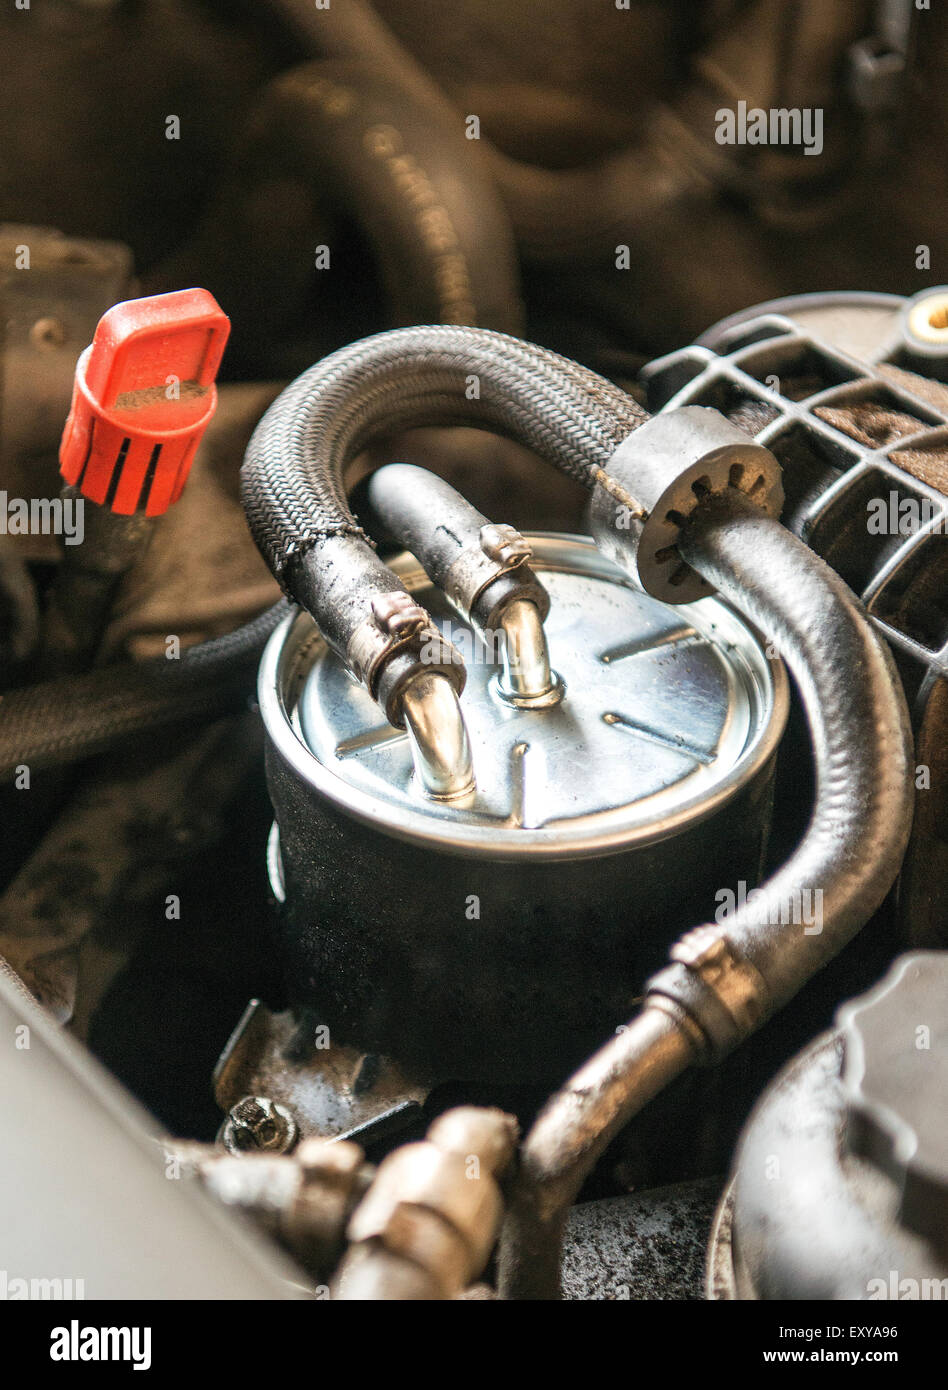 https://c8.alamy.com/comp/EXYA96/brand-new-diesel-filter-on-a-car-engine-EXYA96.jpg